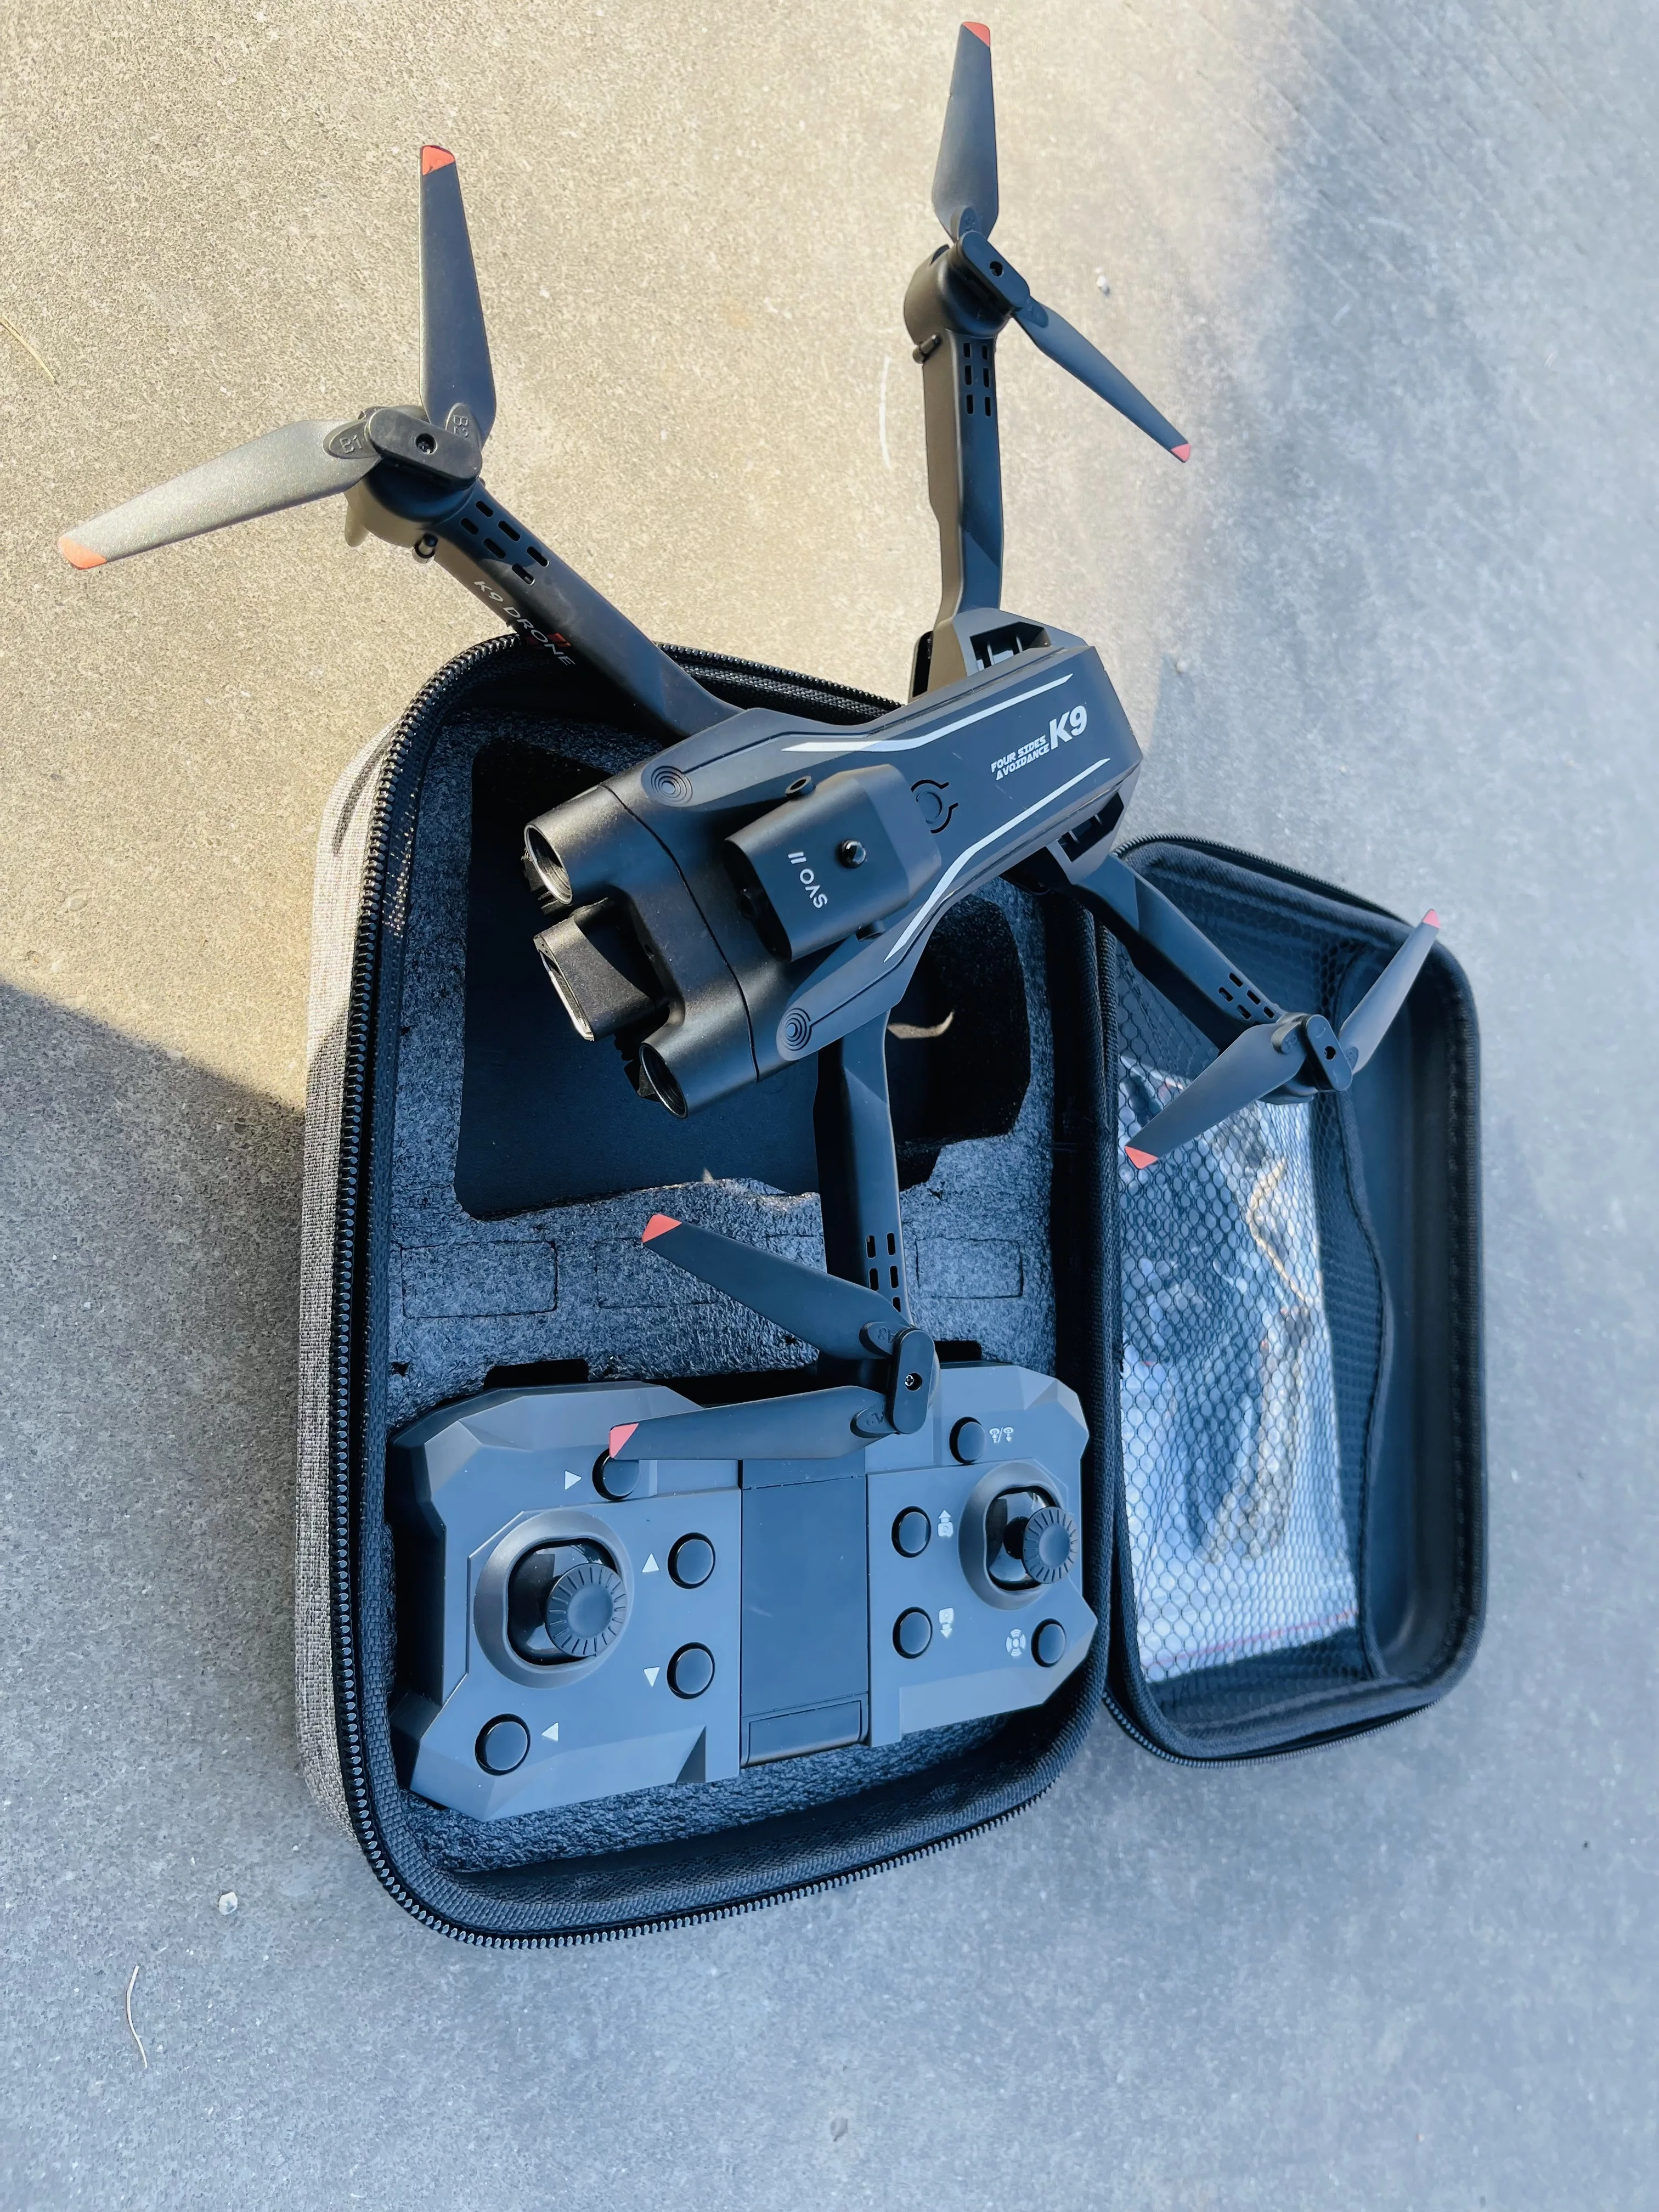 K9 PRO Mini Drone 8K HD Camera photo review